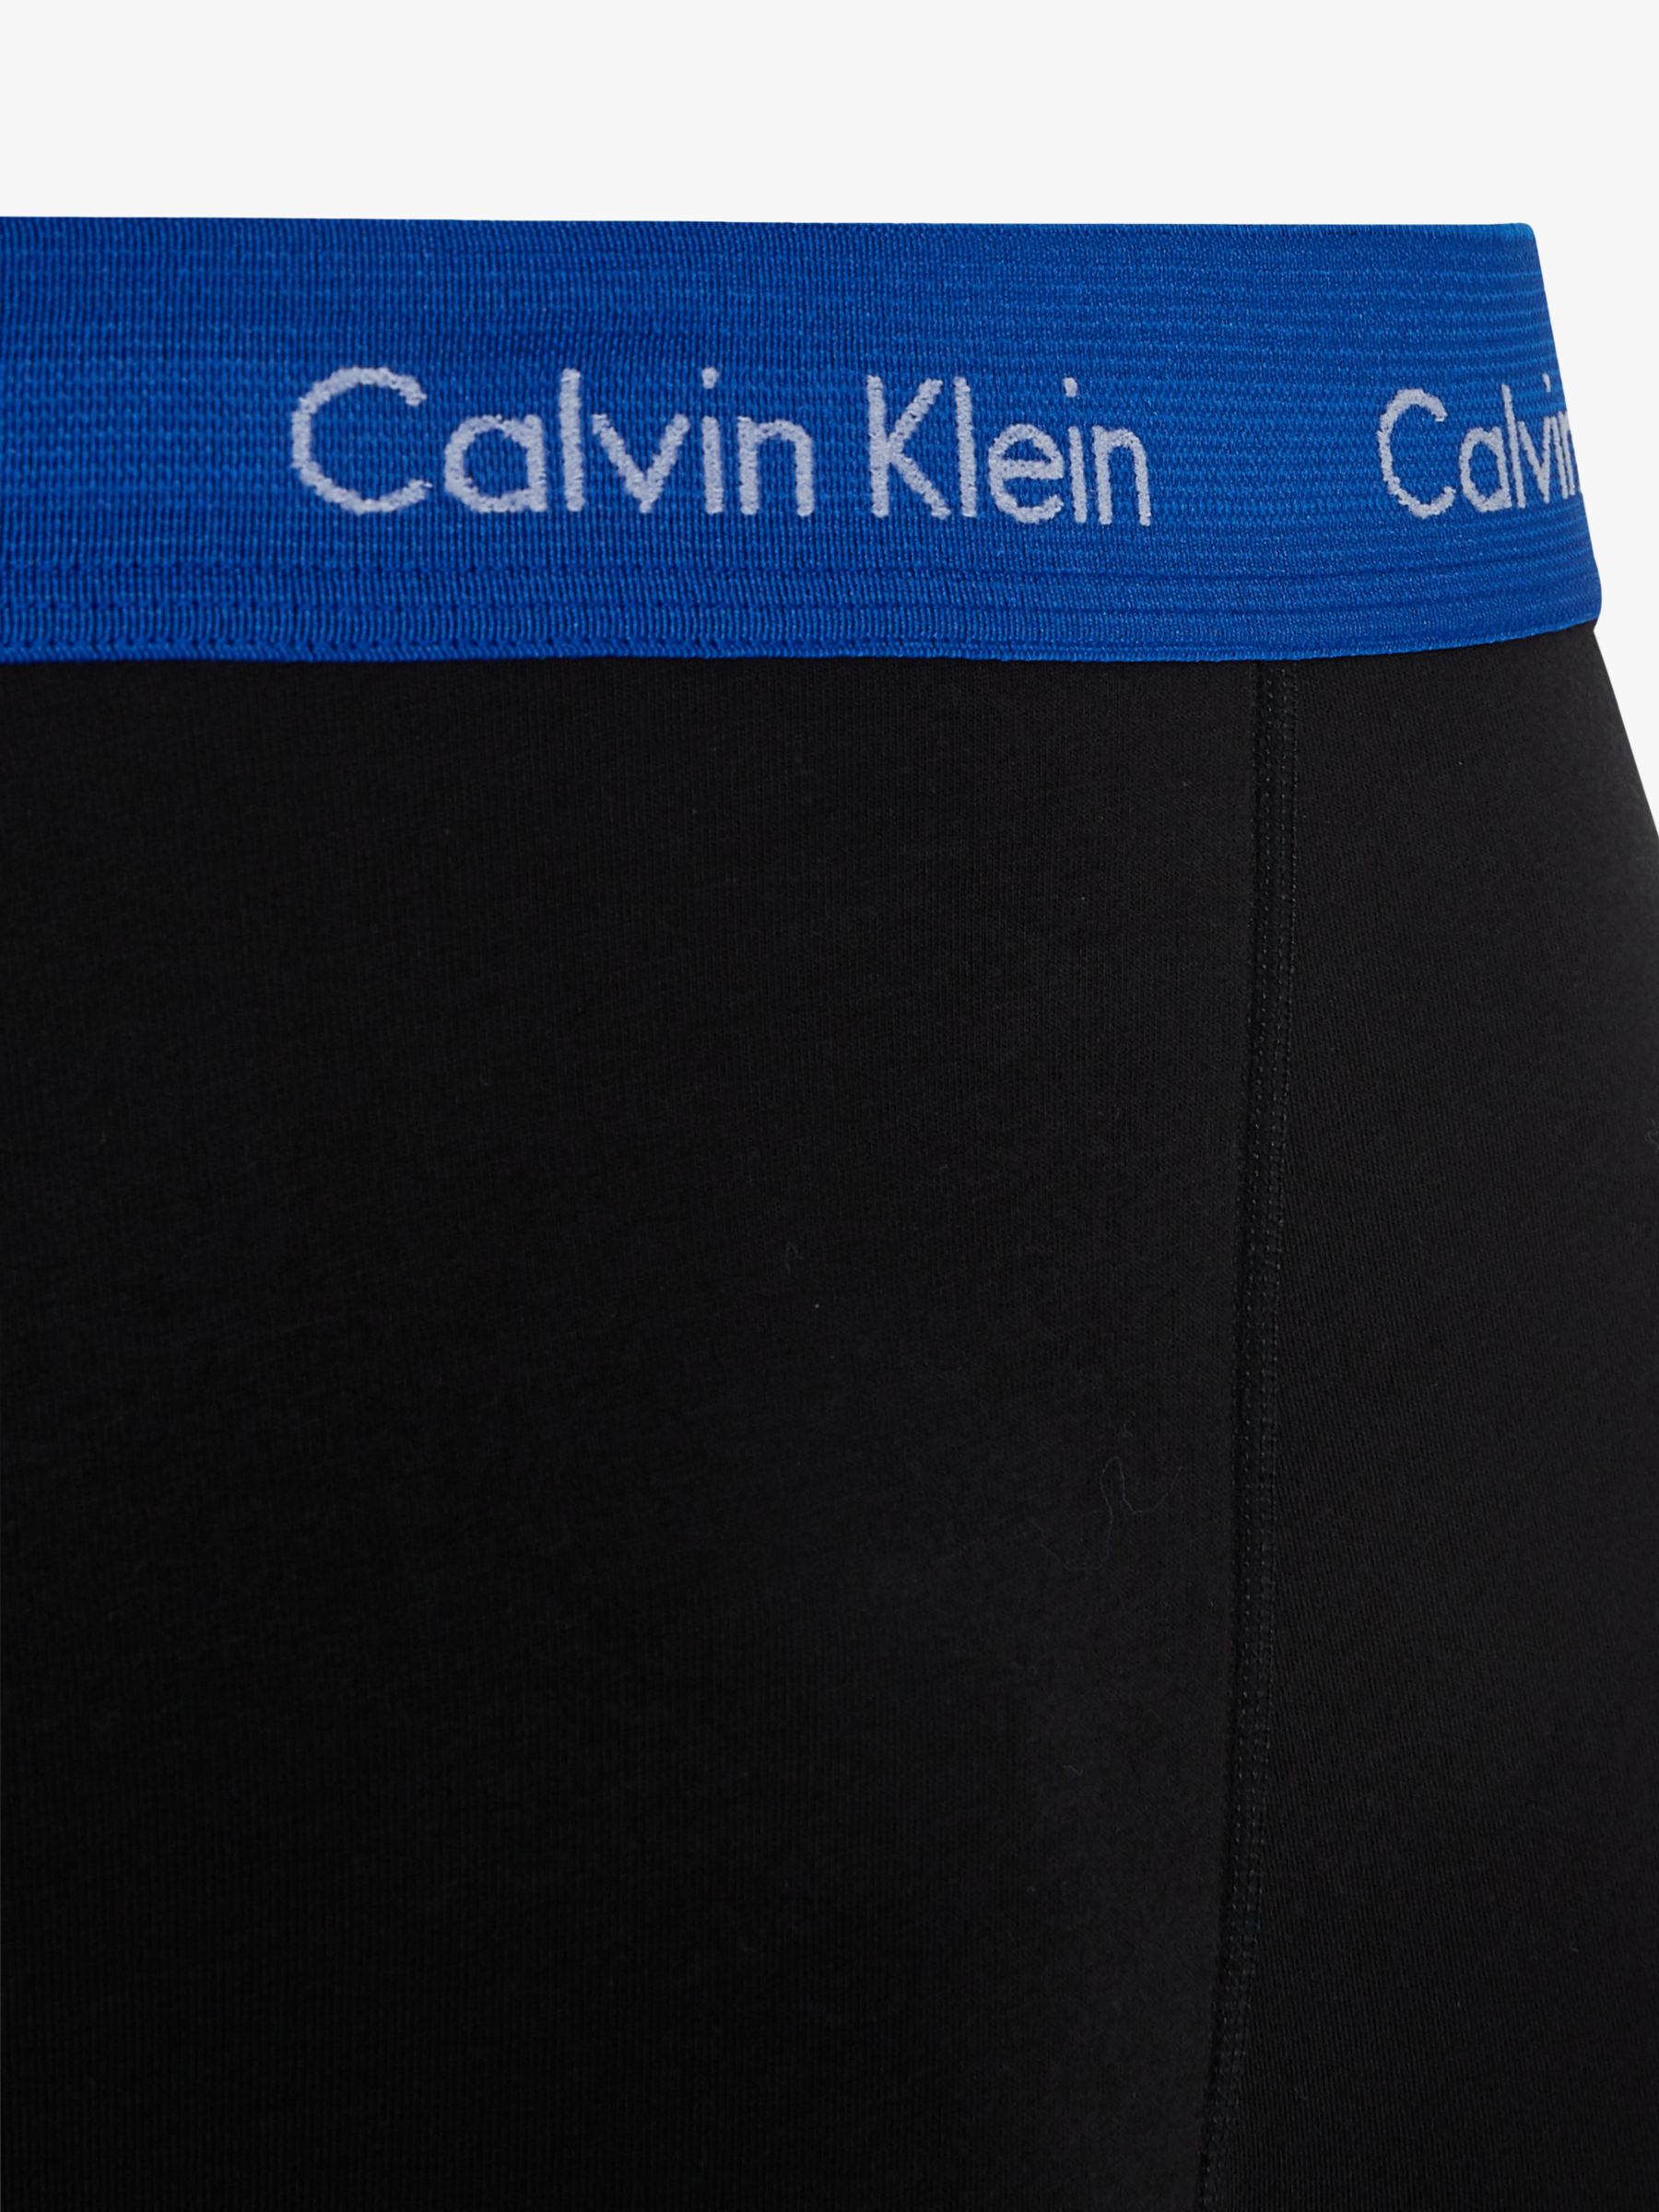 Calvin Klein Regular Cotton Stretch Trunks, Pack of 3, Black/Cobalt/Rebellious, L